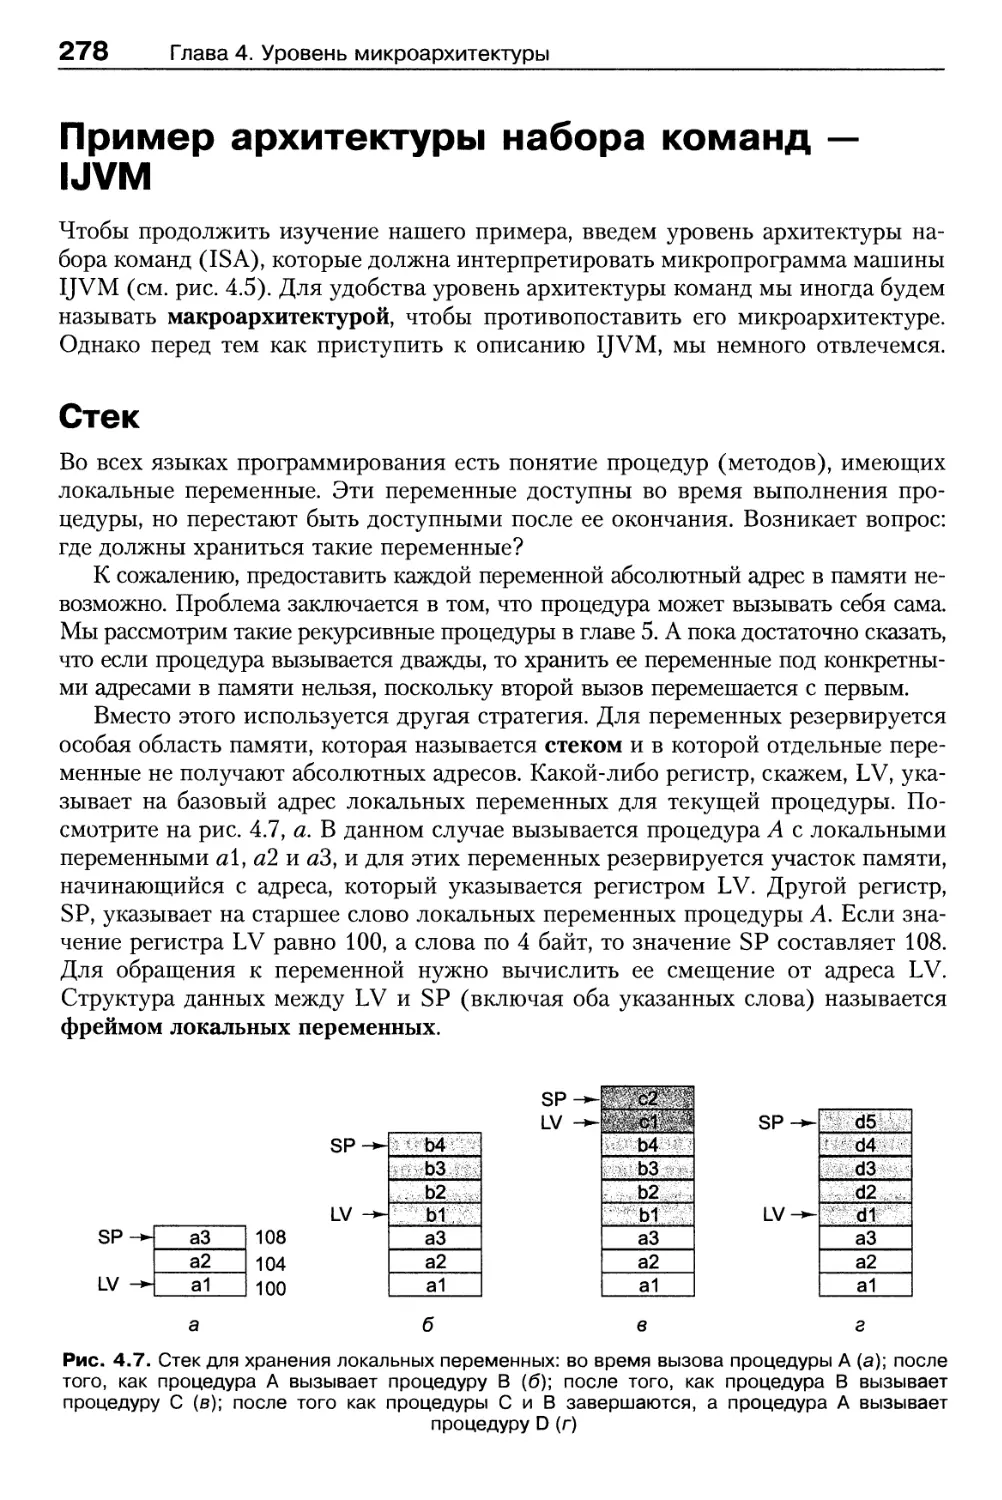 Пример архитектуры набора команд — IJVM